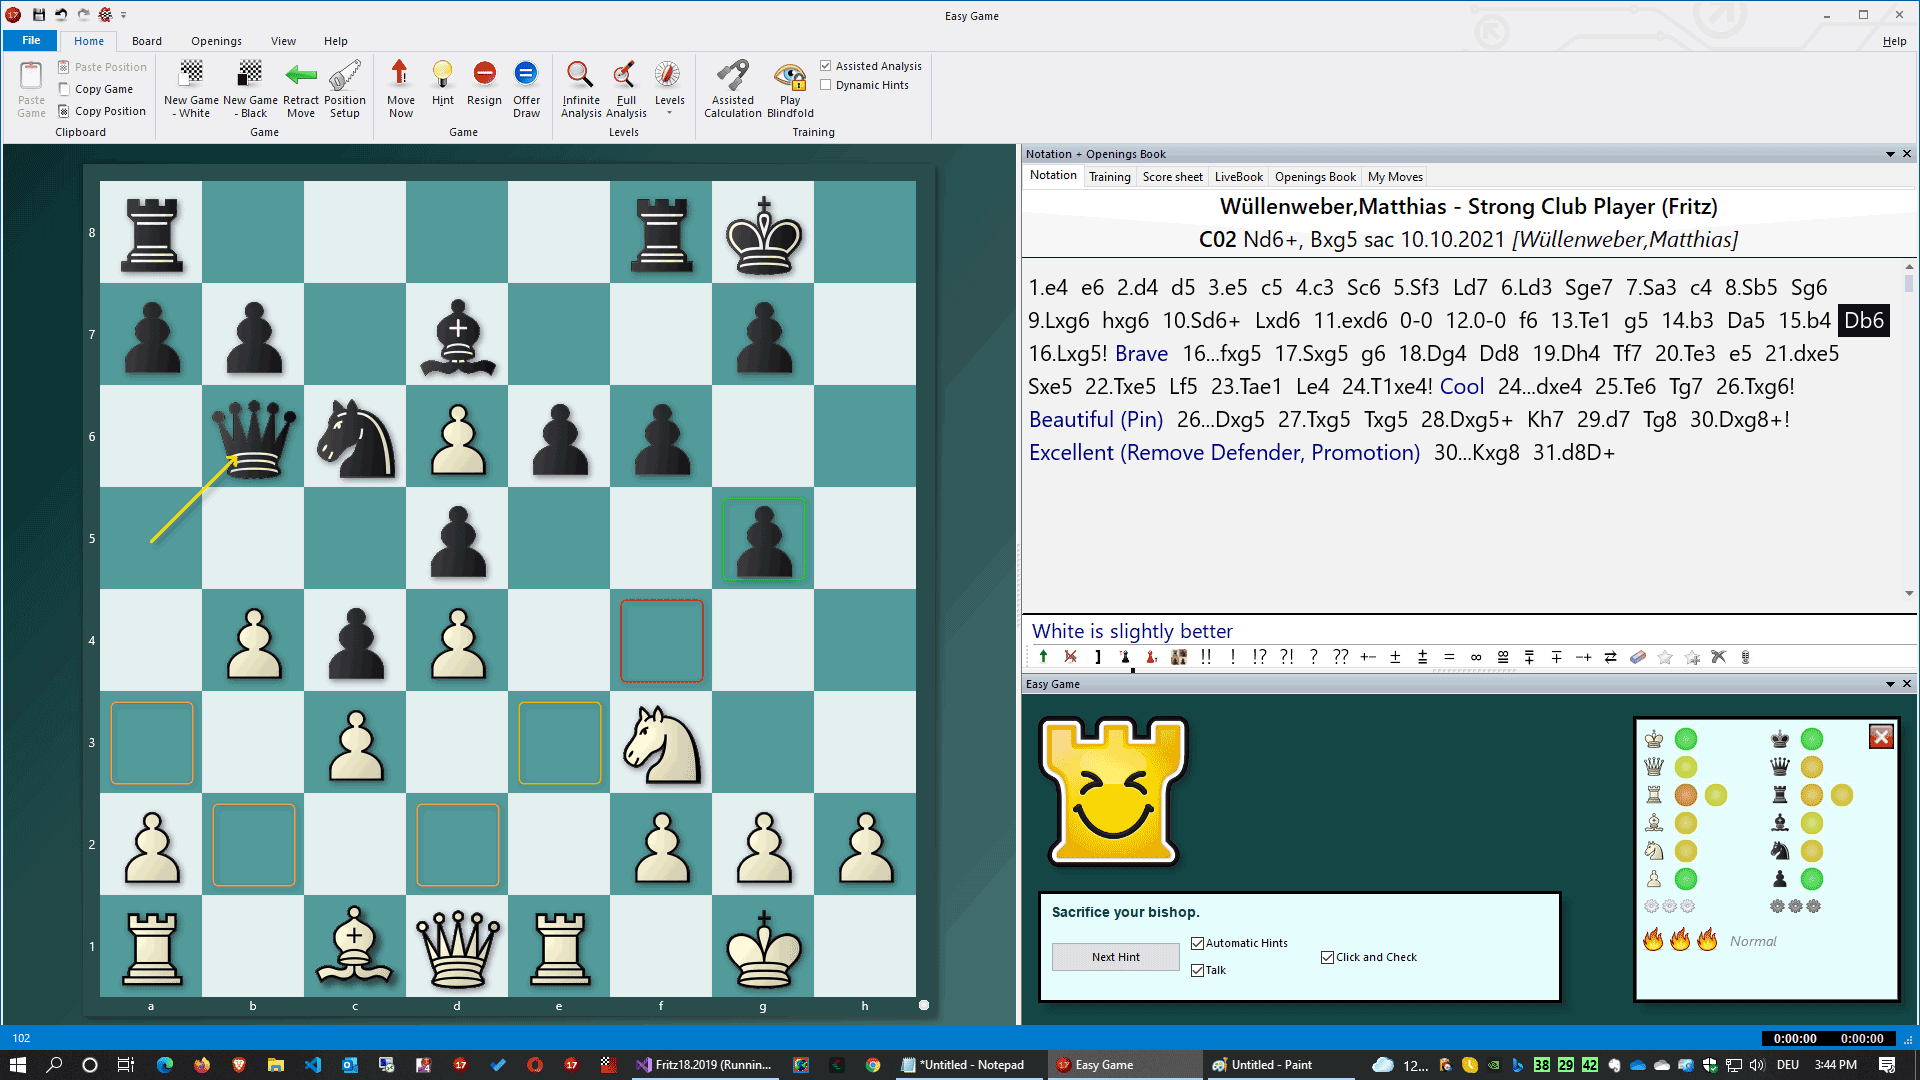 chess Fritz 13 chessbase Computer world Champion DVD software